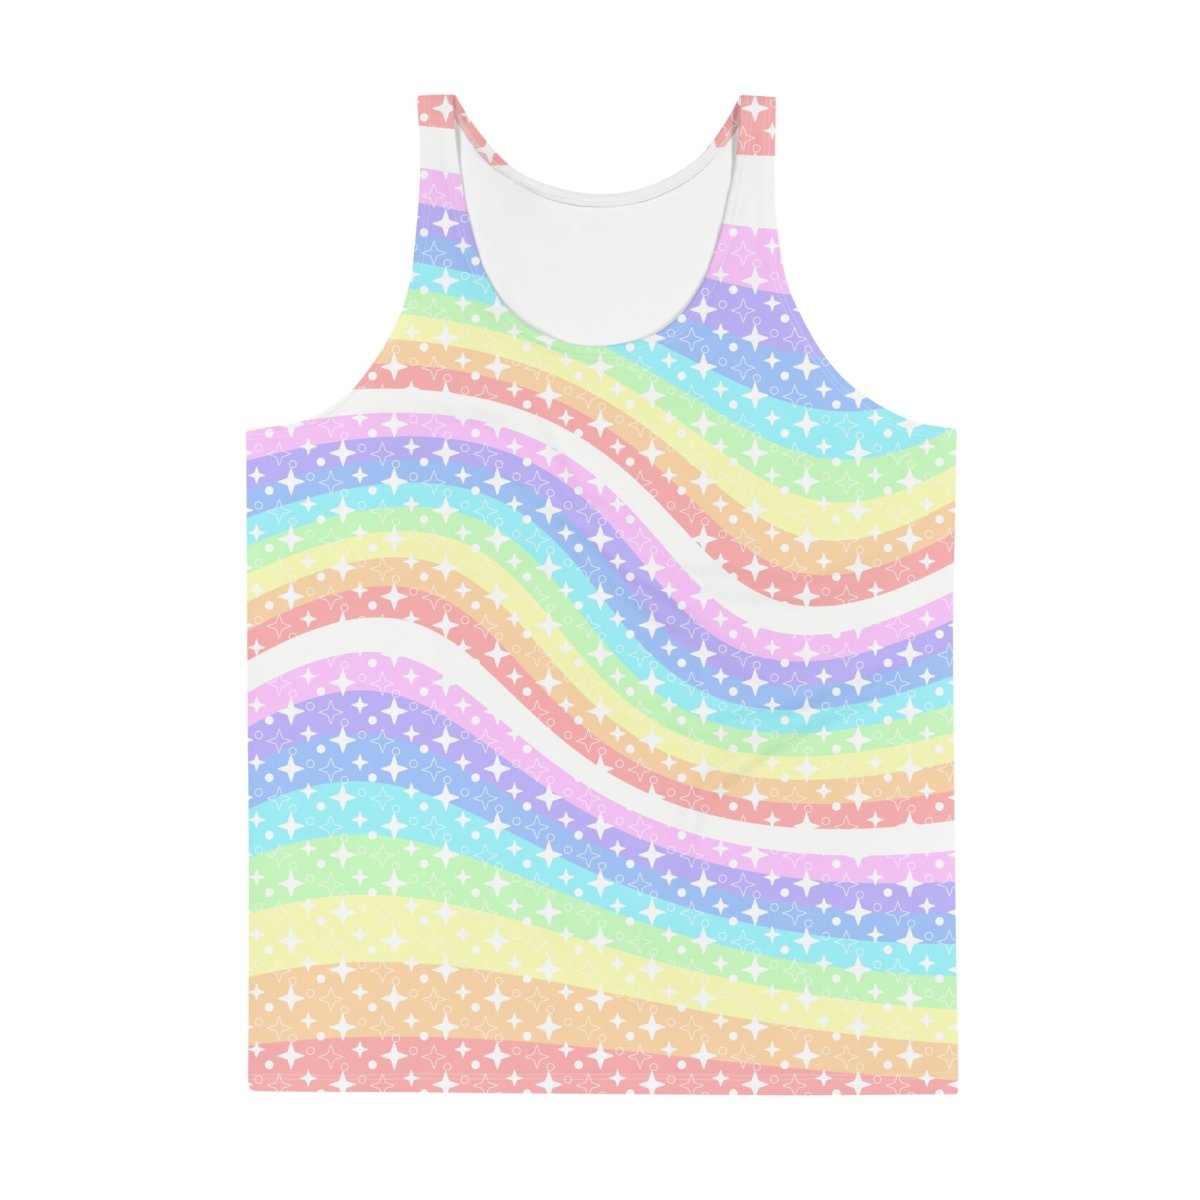 Starry Pastel Rainbow Tank Top - On Trend Shirts